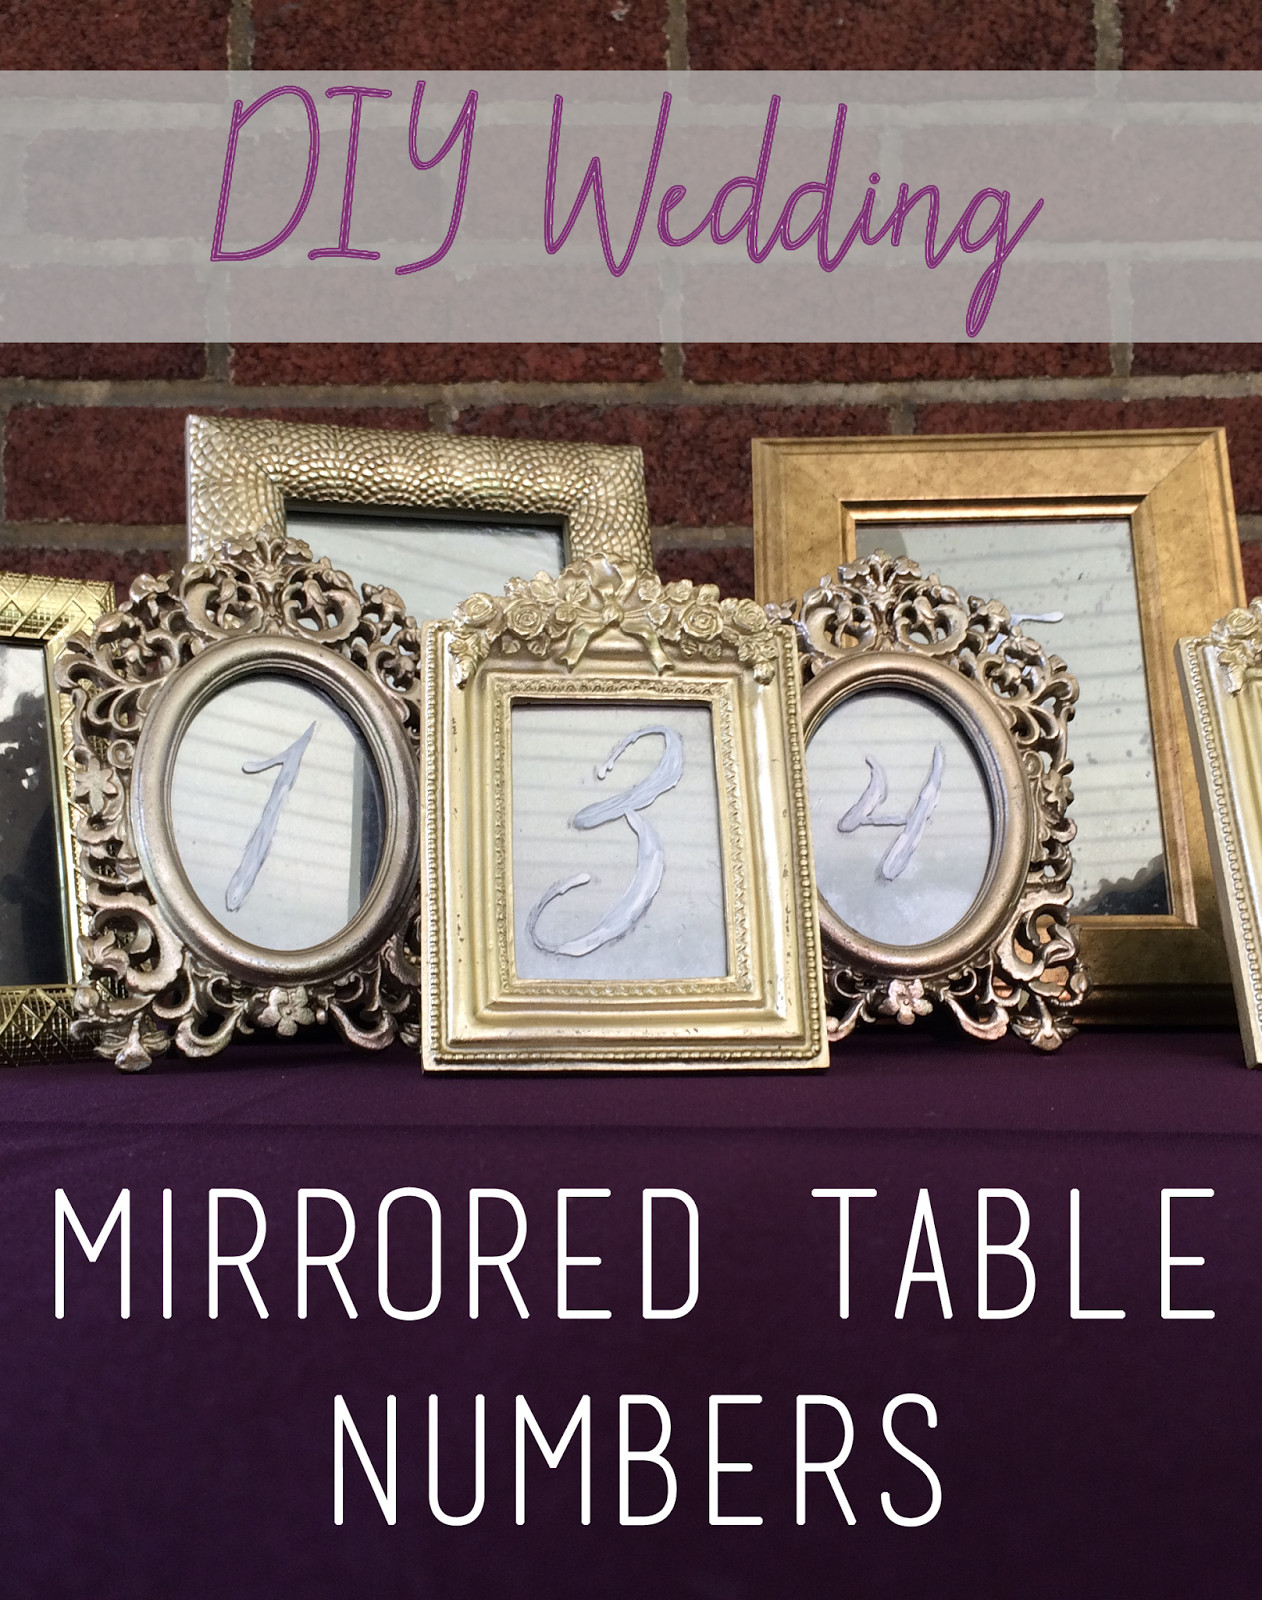 DIY Wedding Table Numbers
 Queen of the Cardigans DIY Wedding Table Numbers A Tutorial